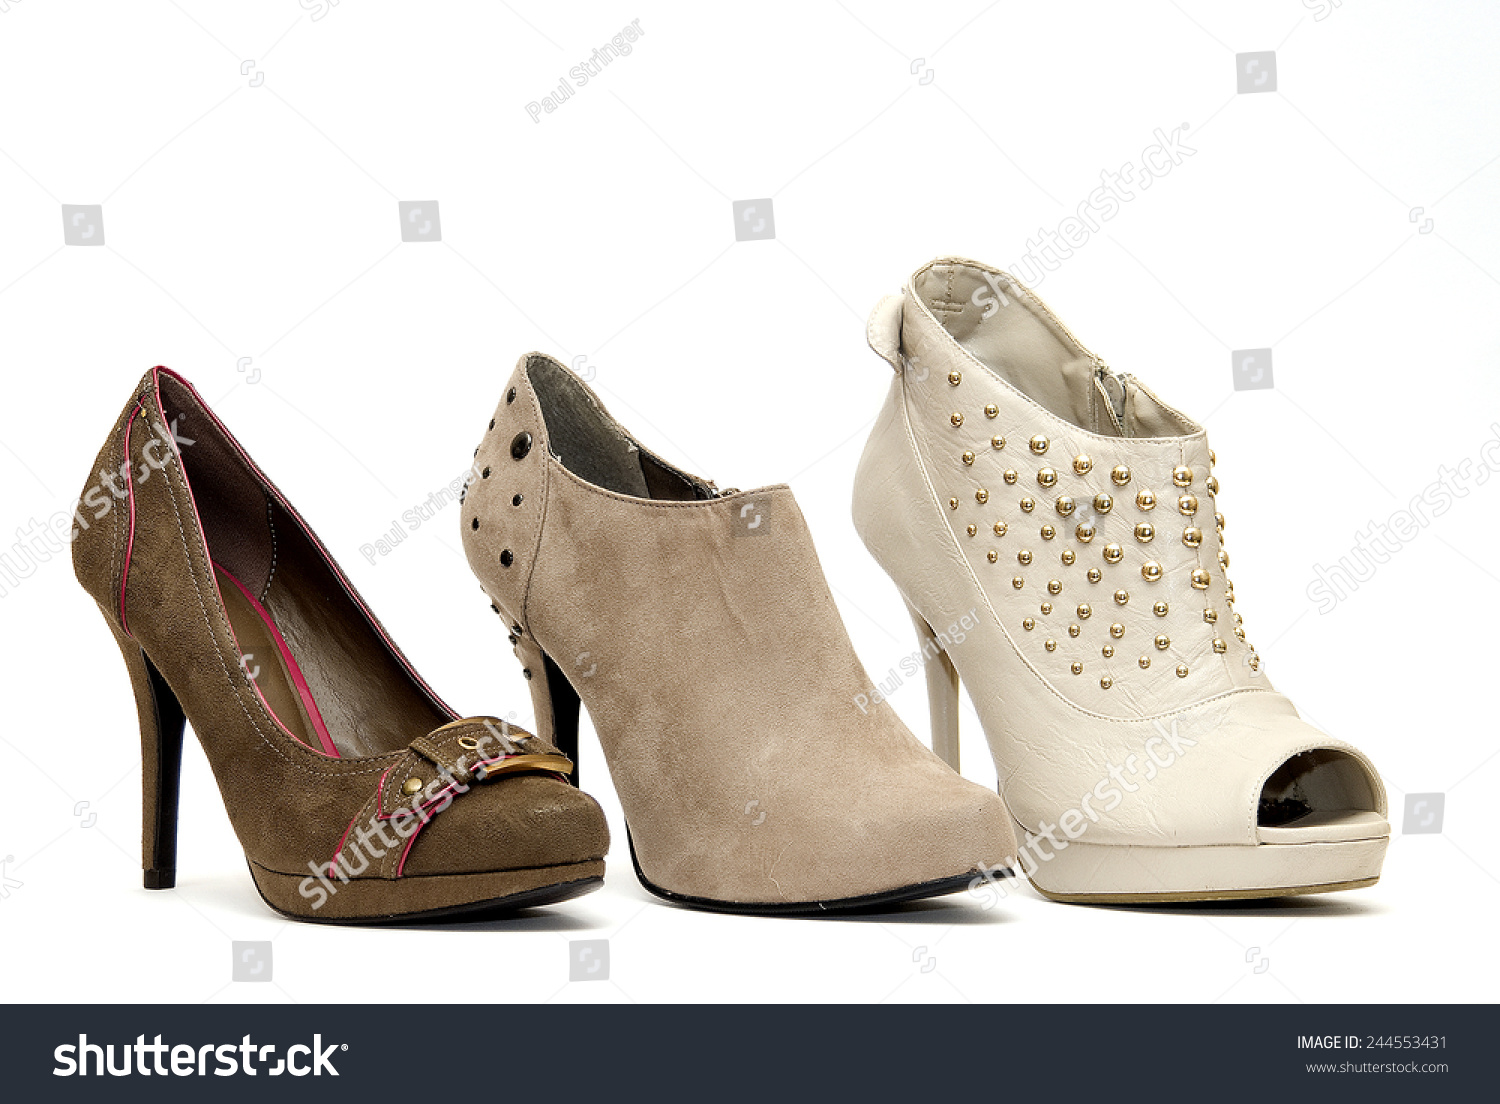 womens studded heels